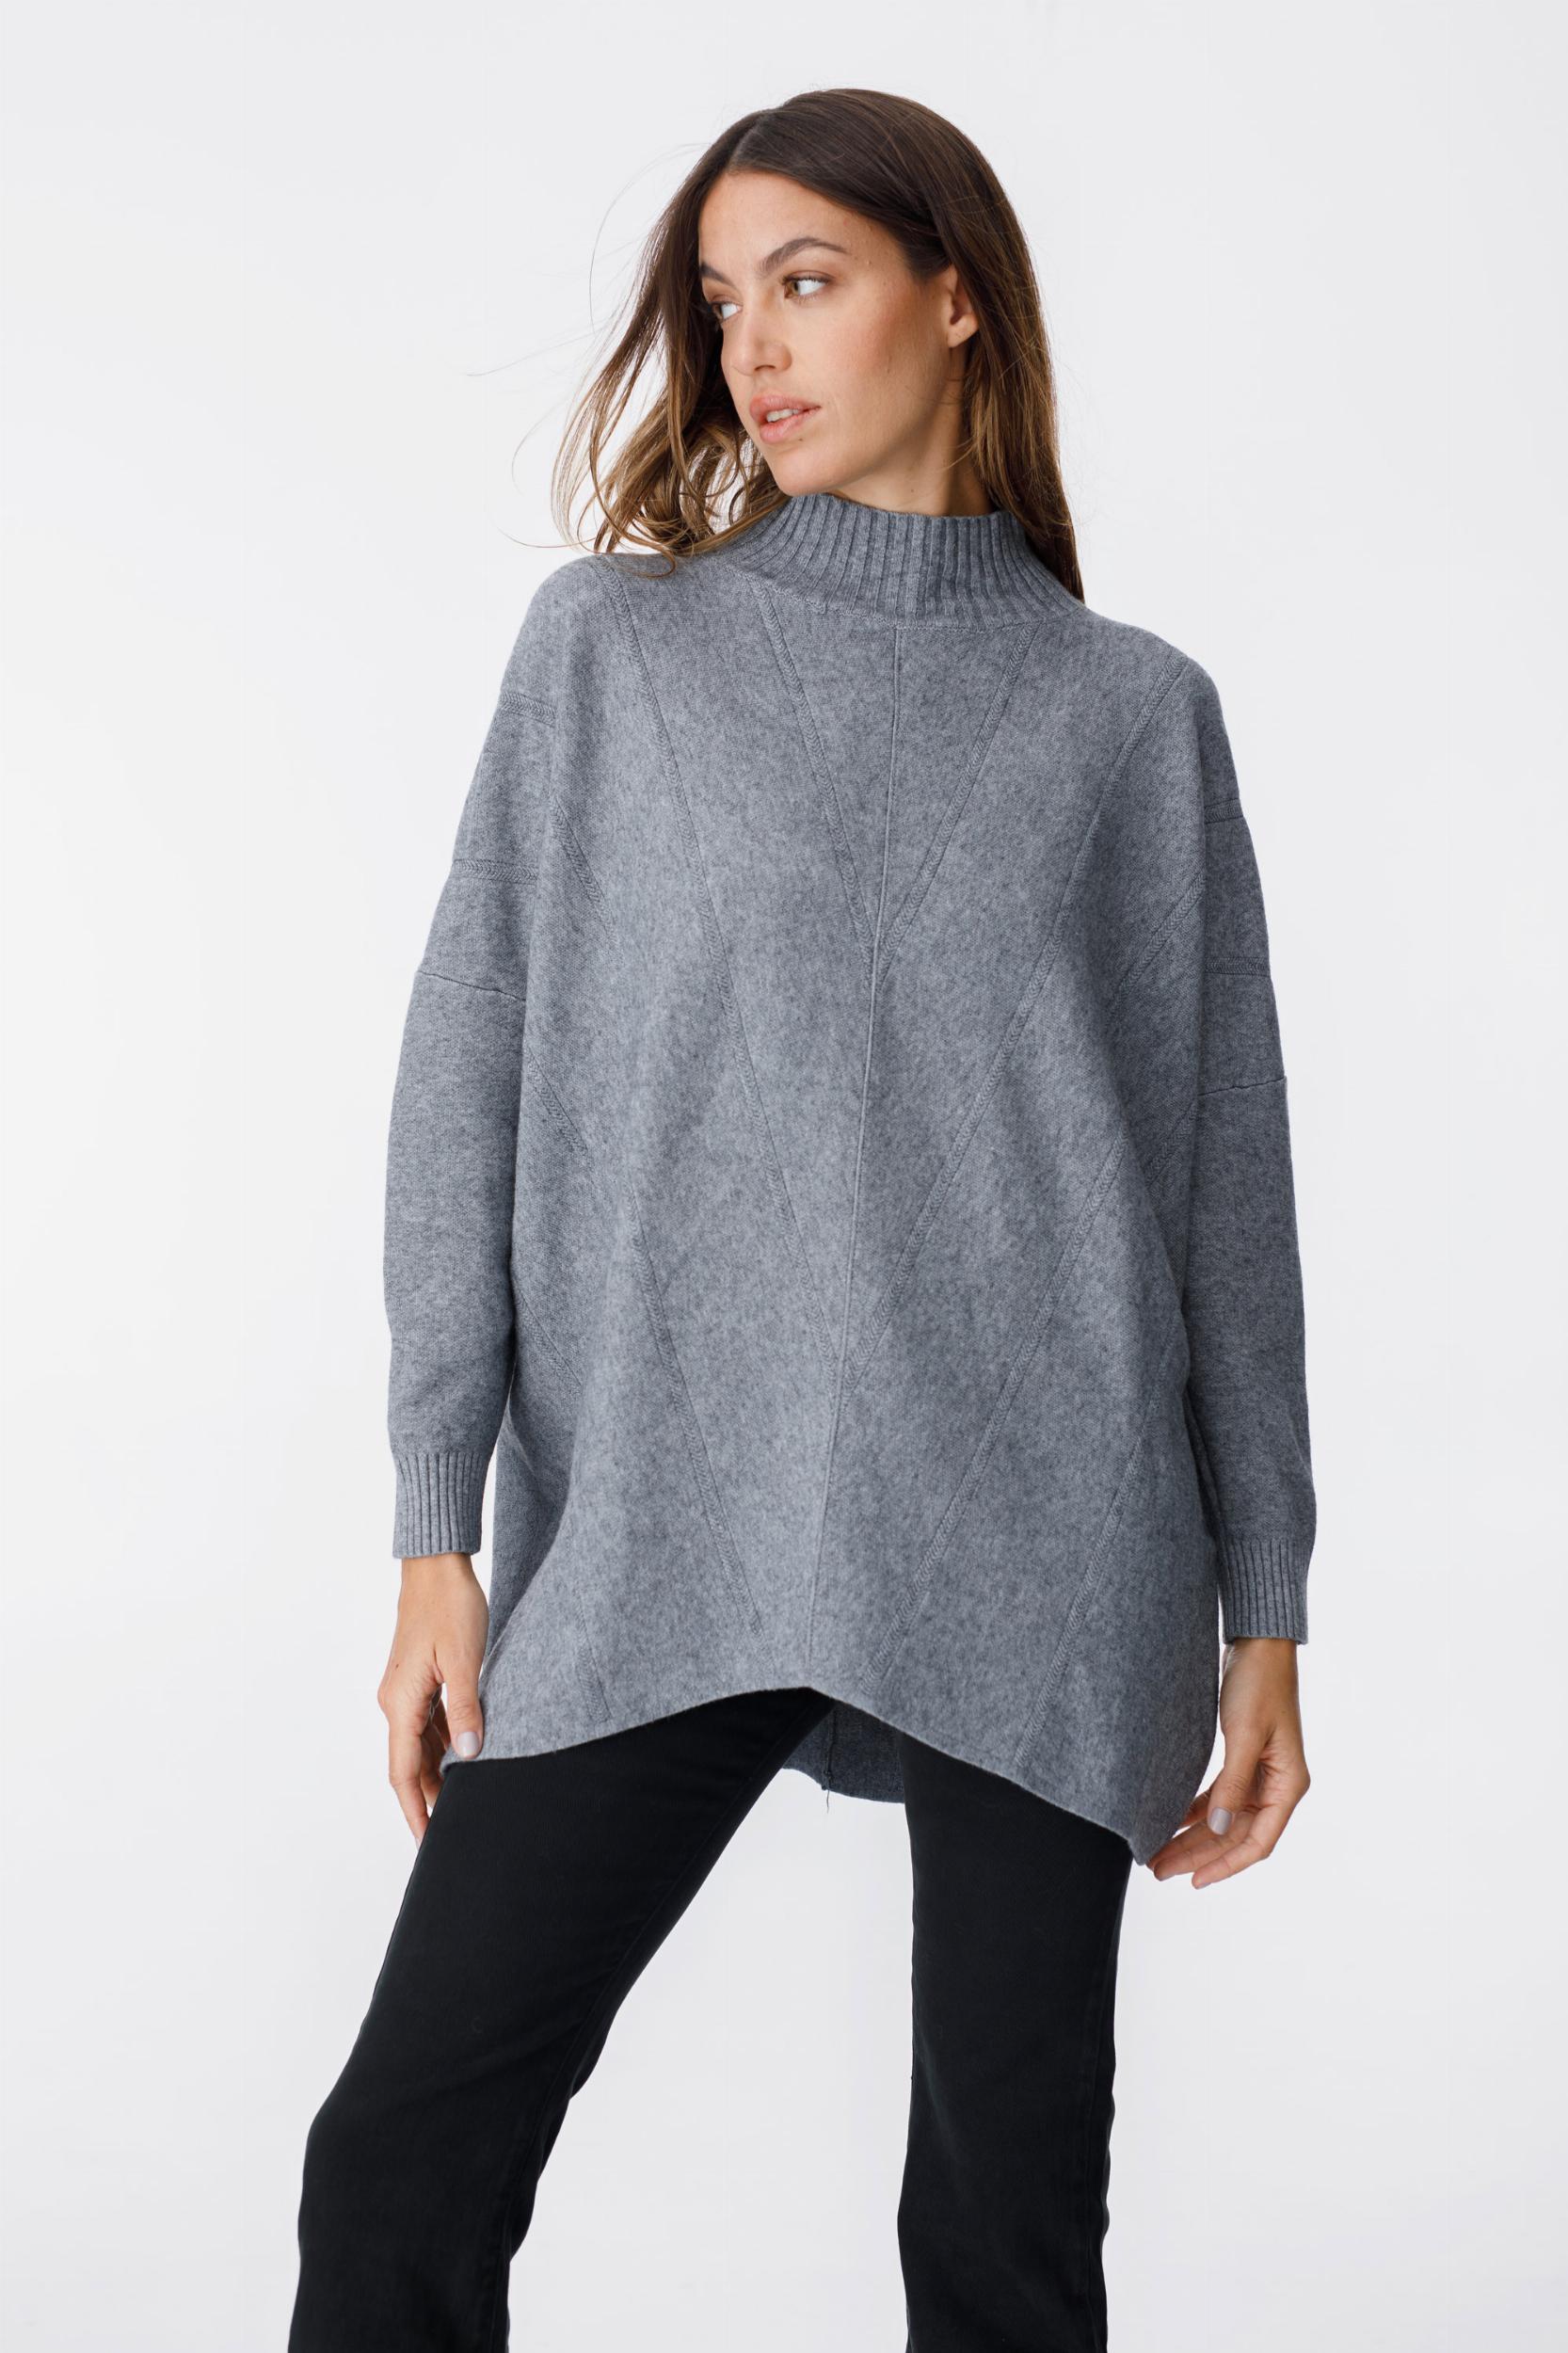 Sweater Luna gris melange talle unico